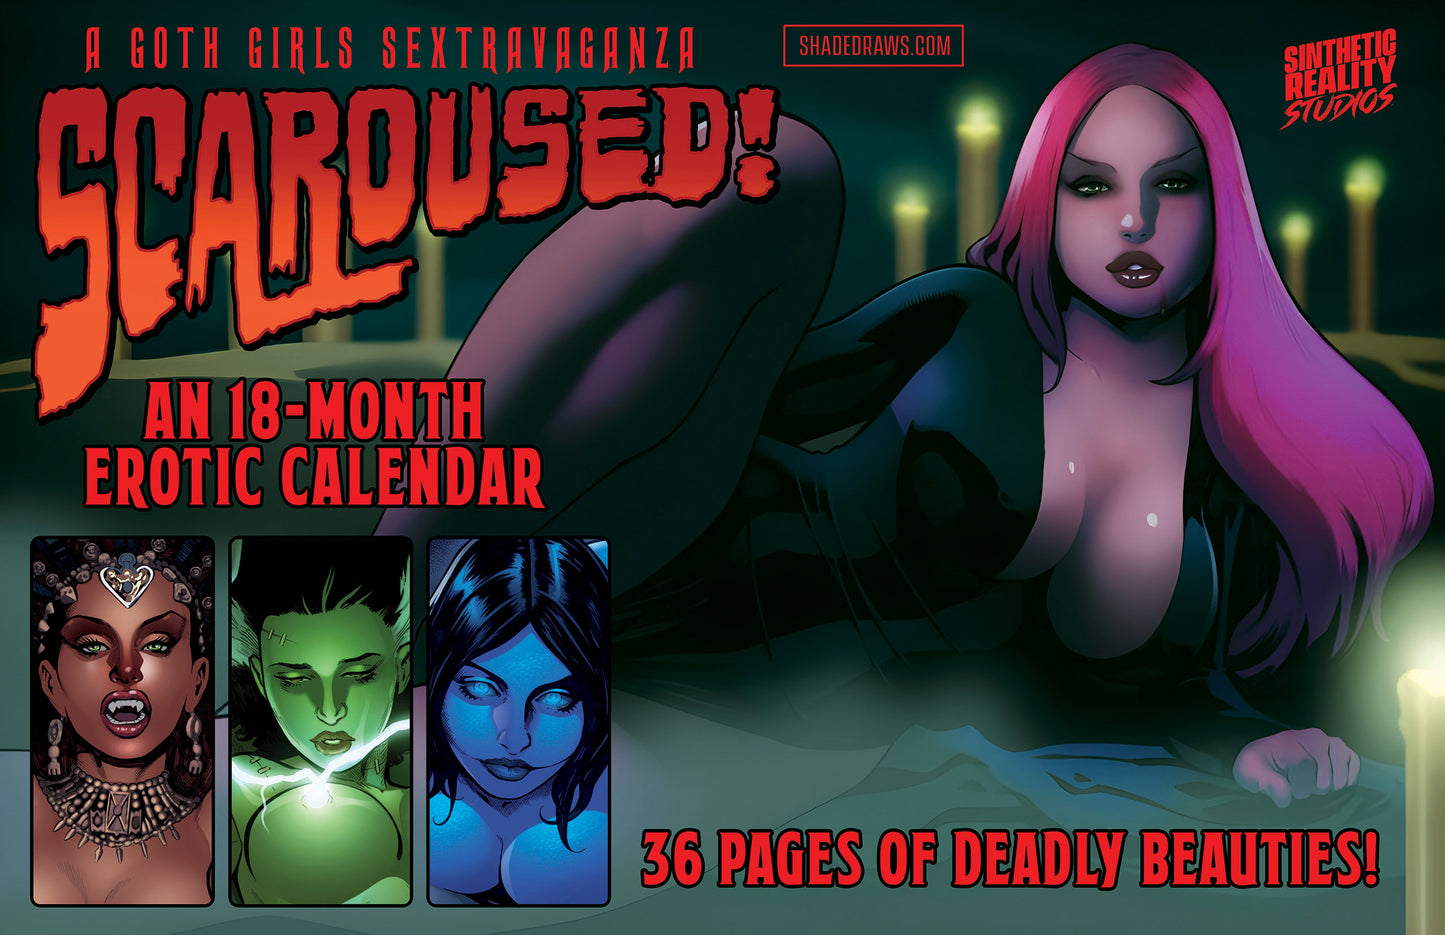 SCAROUSED! Goth Girls Uncensored Calendar - PDF